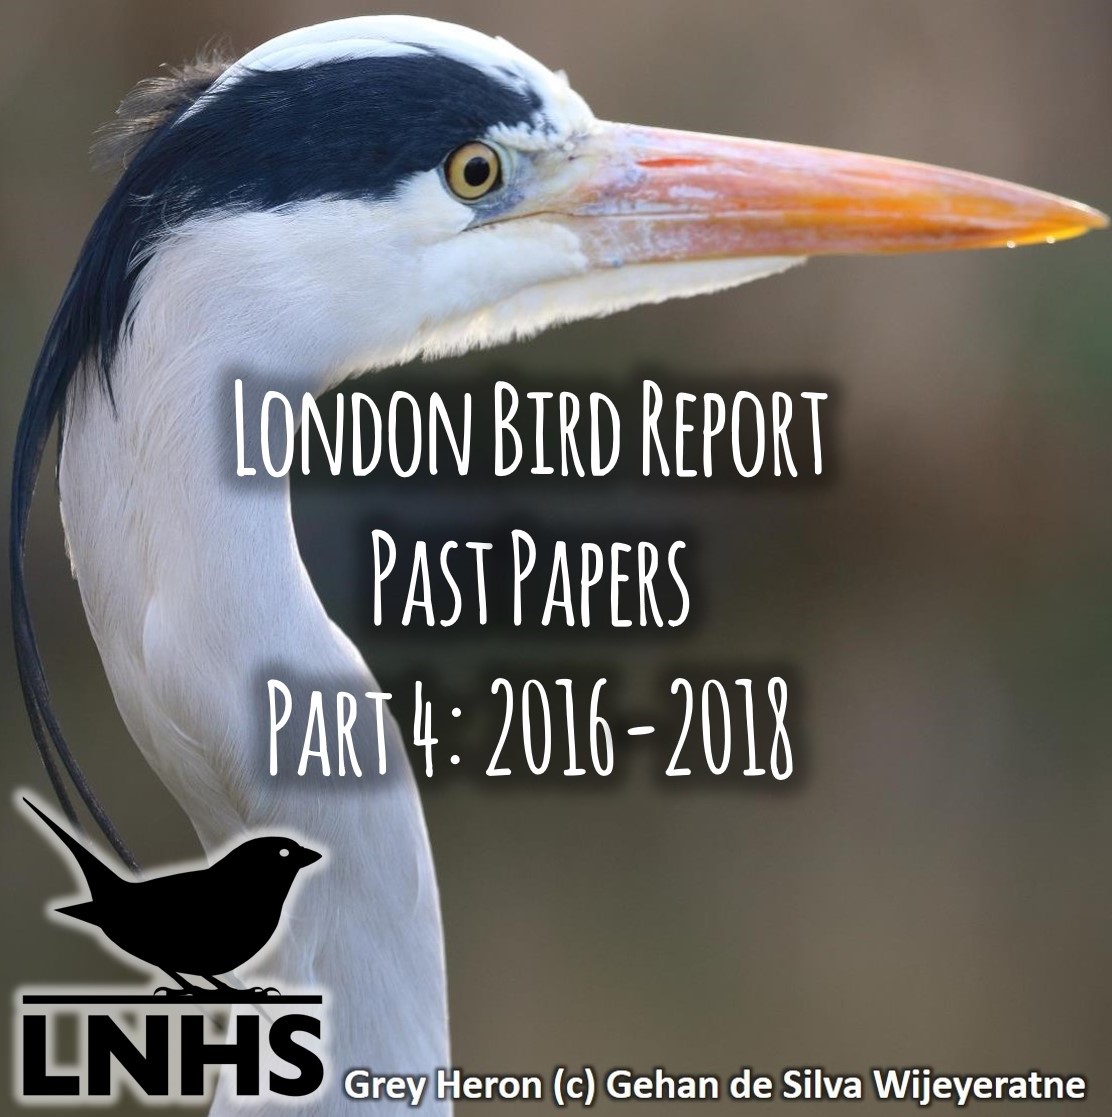 LBR Past Papers Part 4